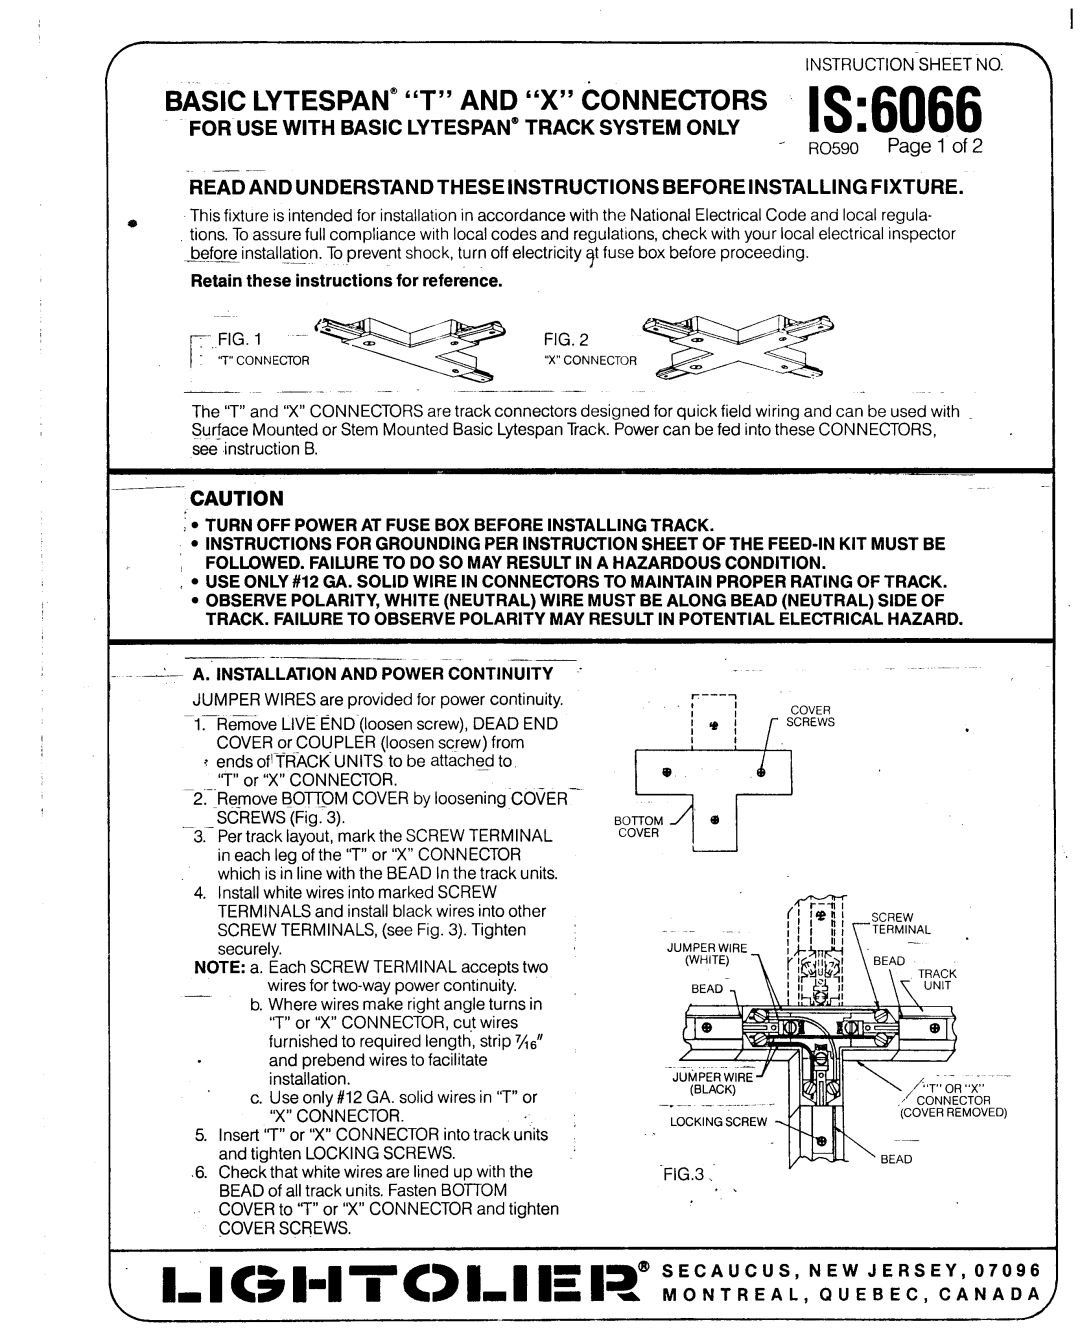 Lightolier 6066 instruction sheet For Use With Basic Lytespan” Track System Only “ 